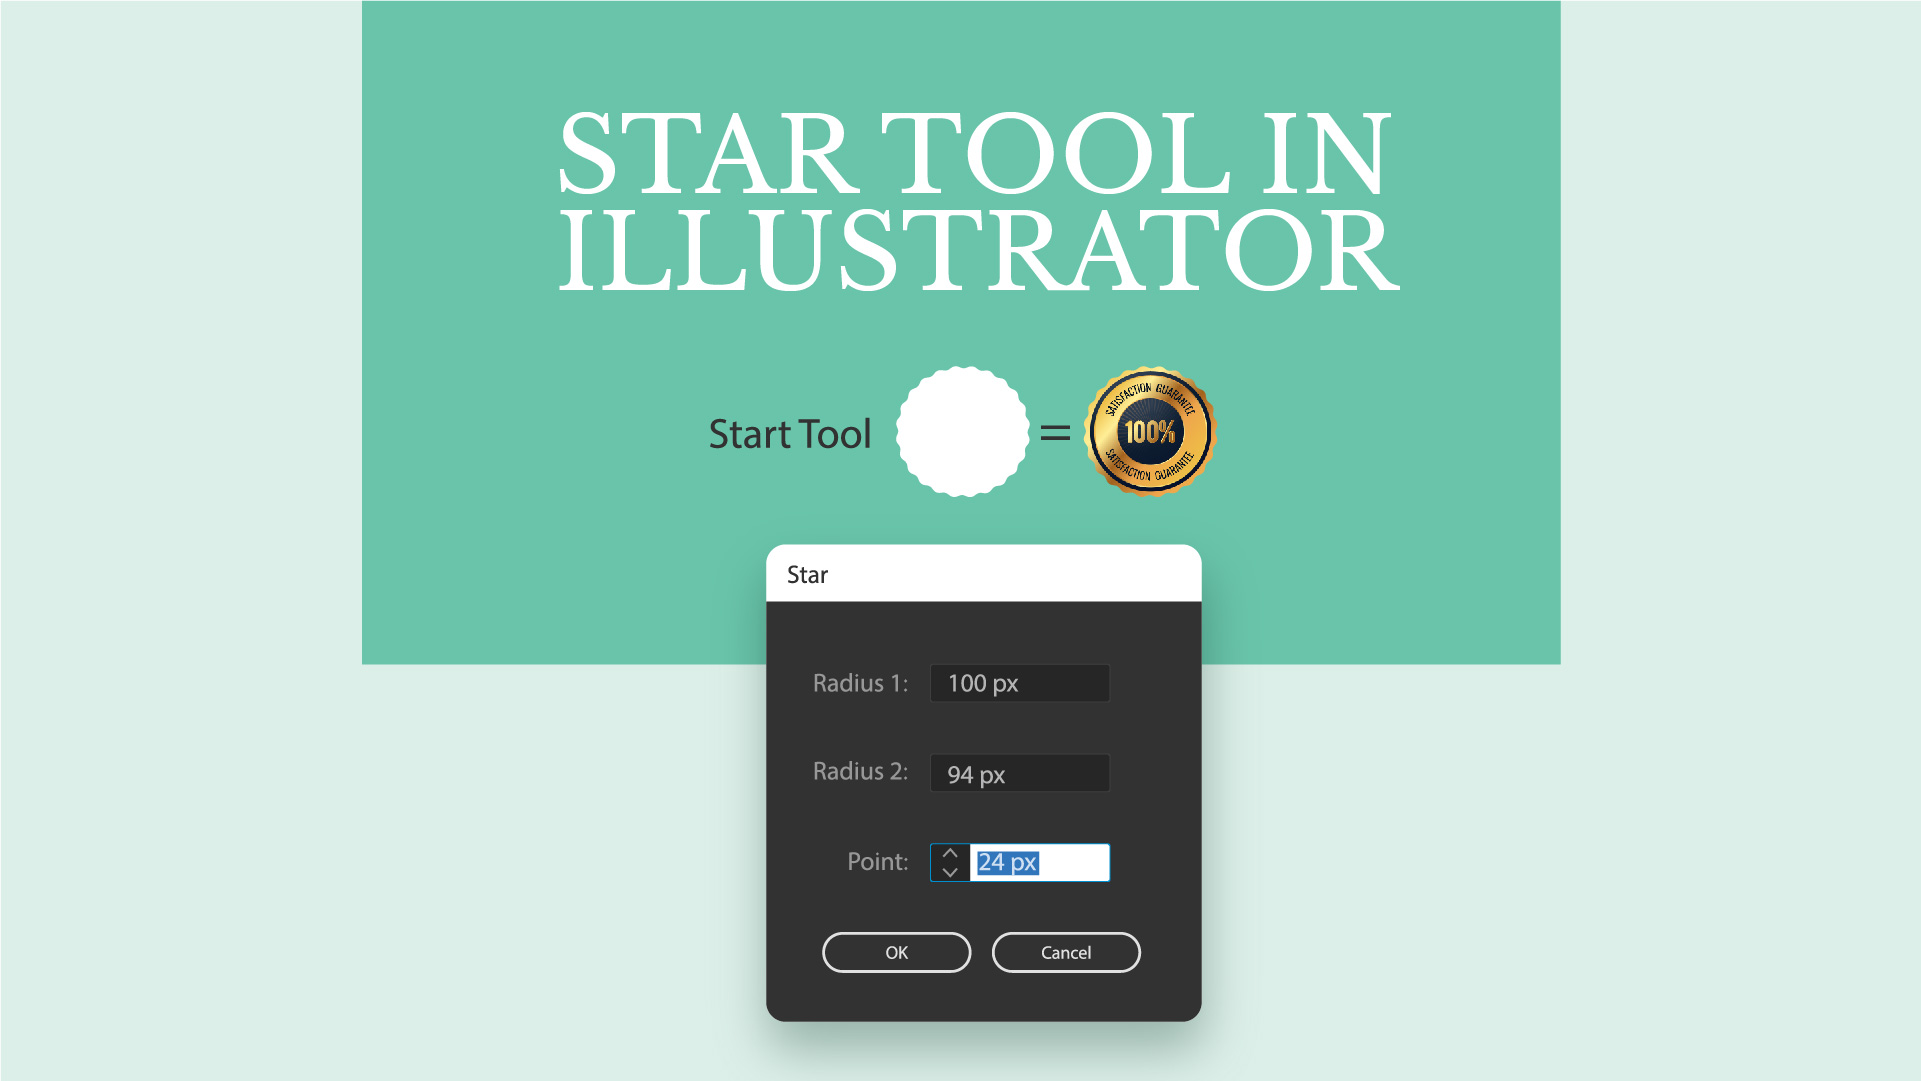 Star tool in illustrator